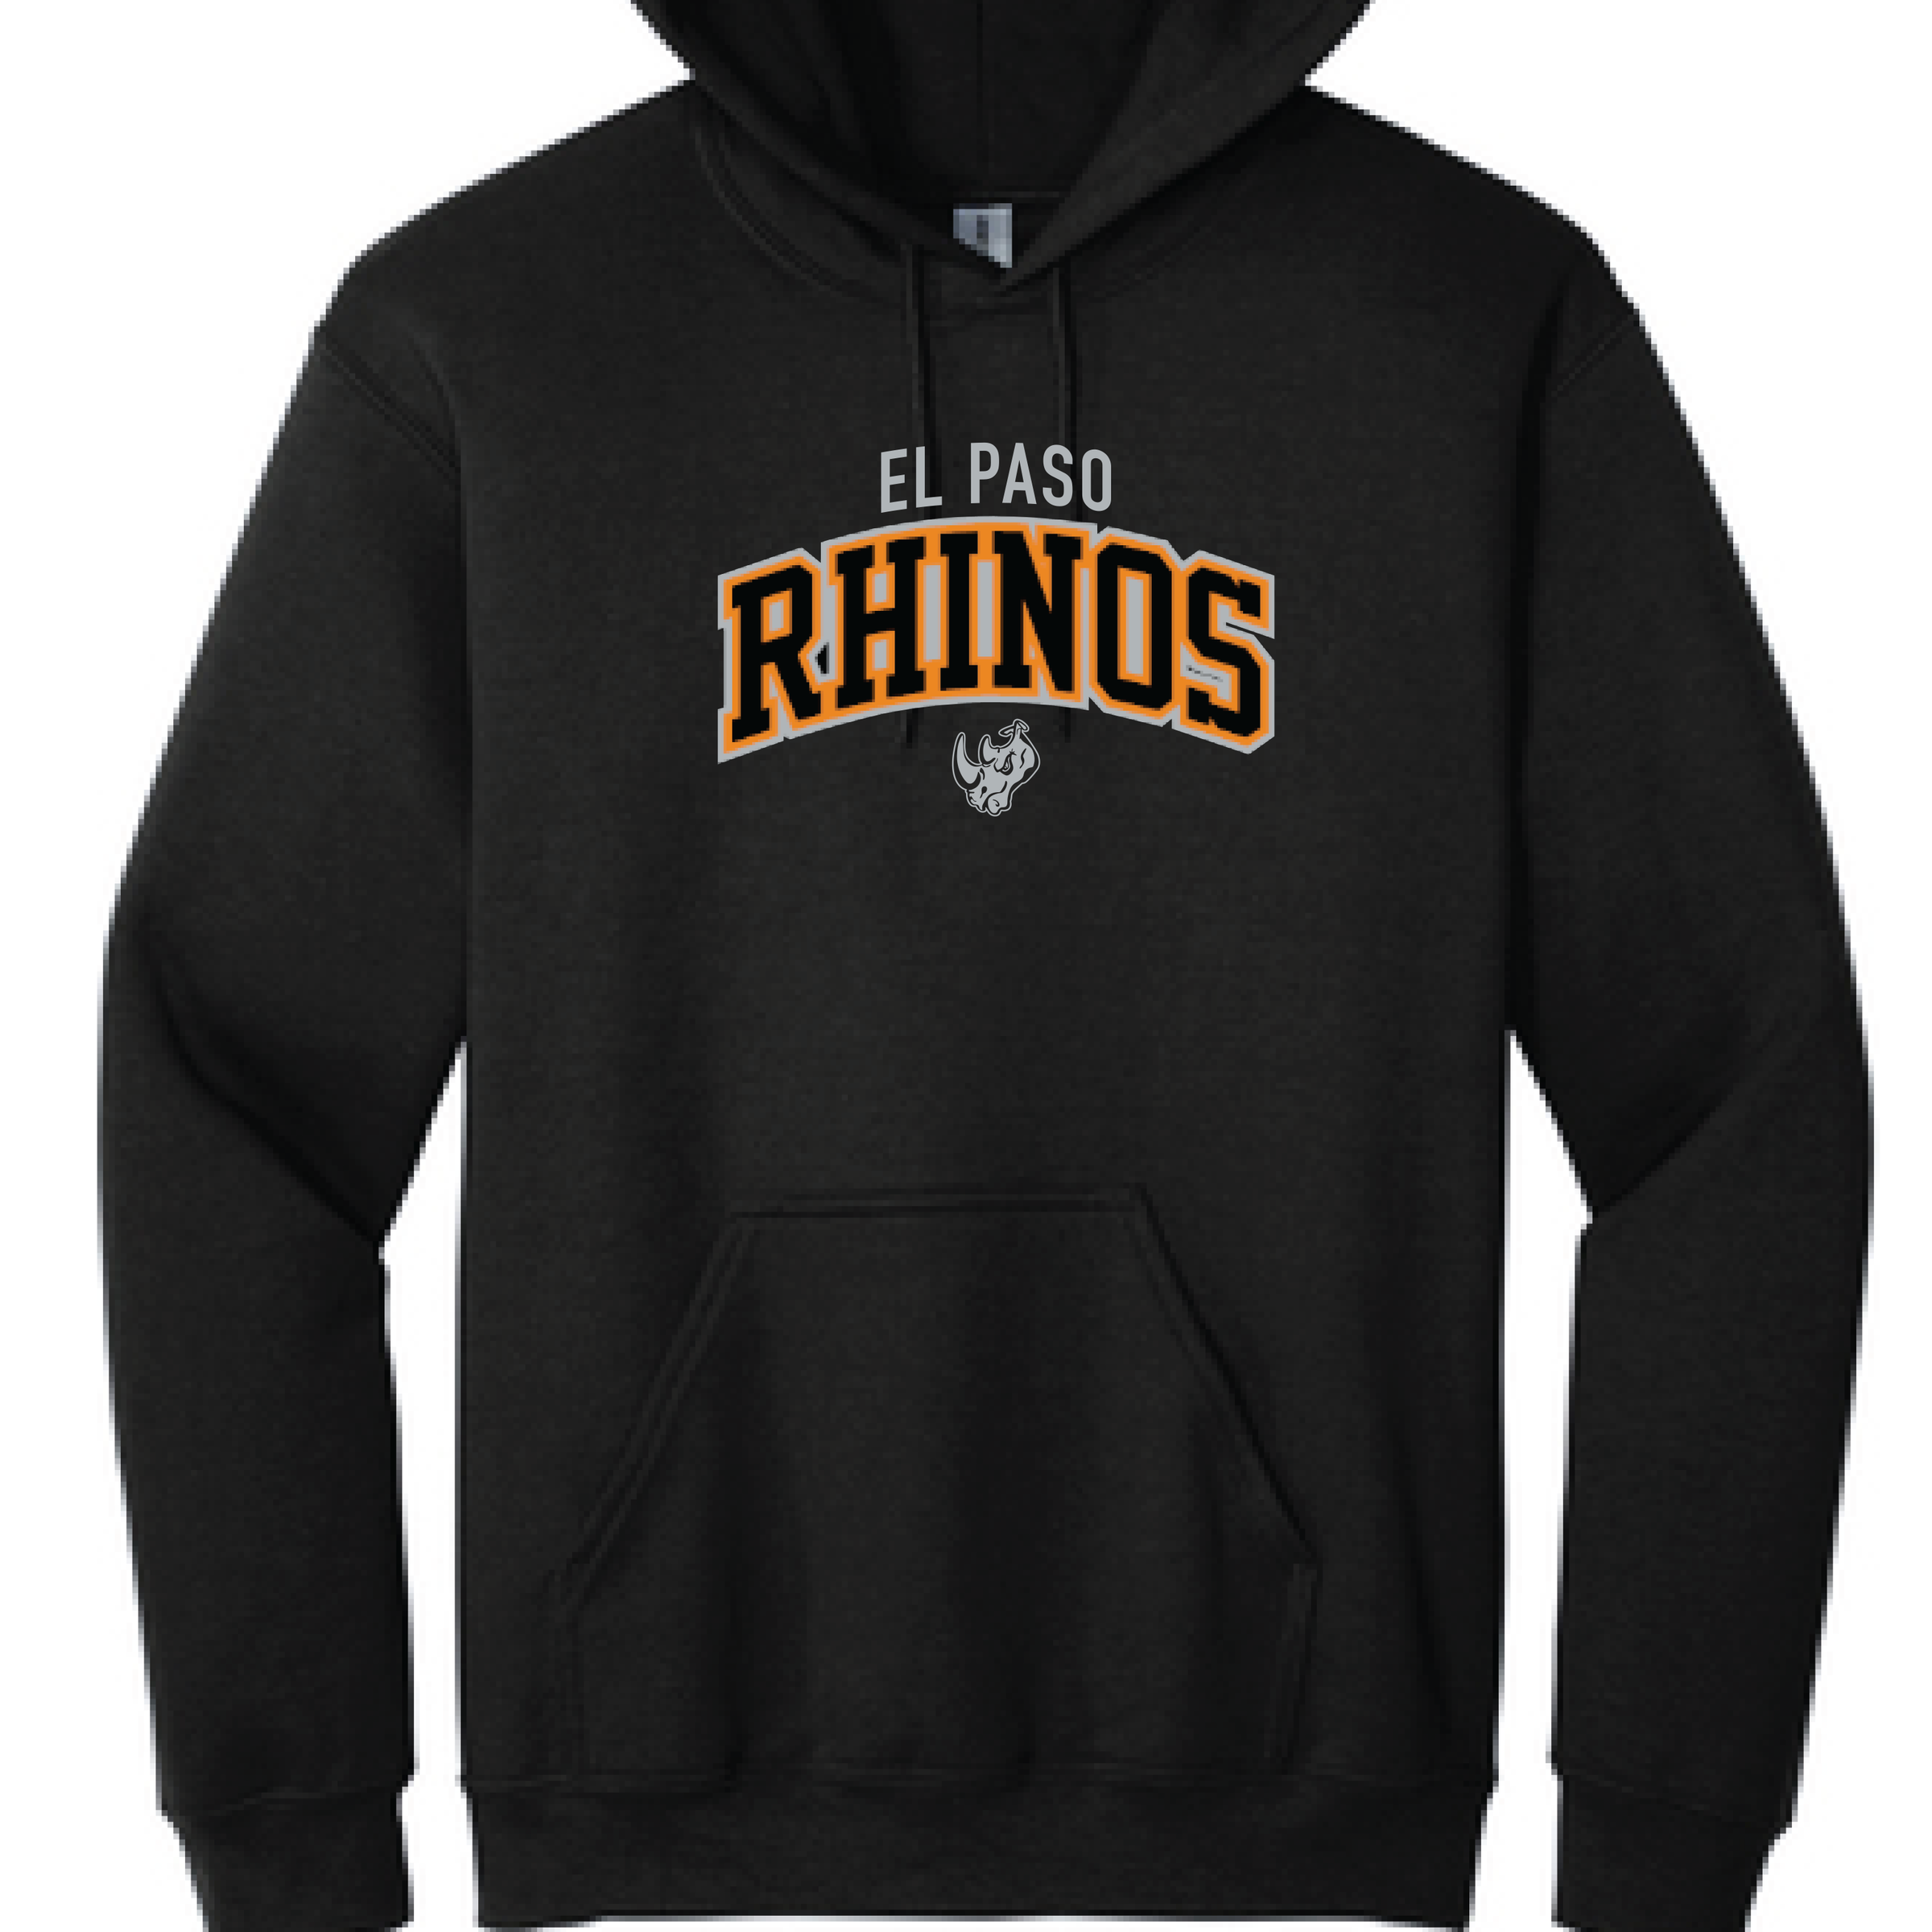 Rhinos hockey team auctions jerseys for Child Crisis Center of El Paso